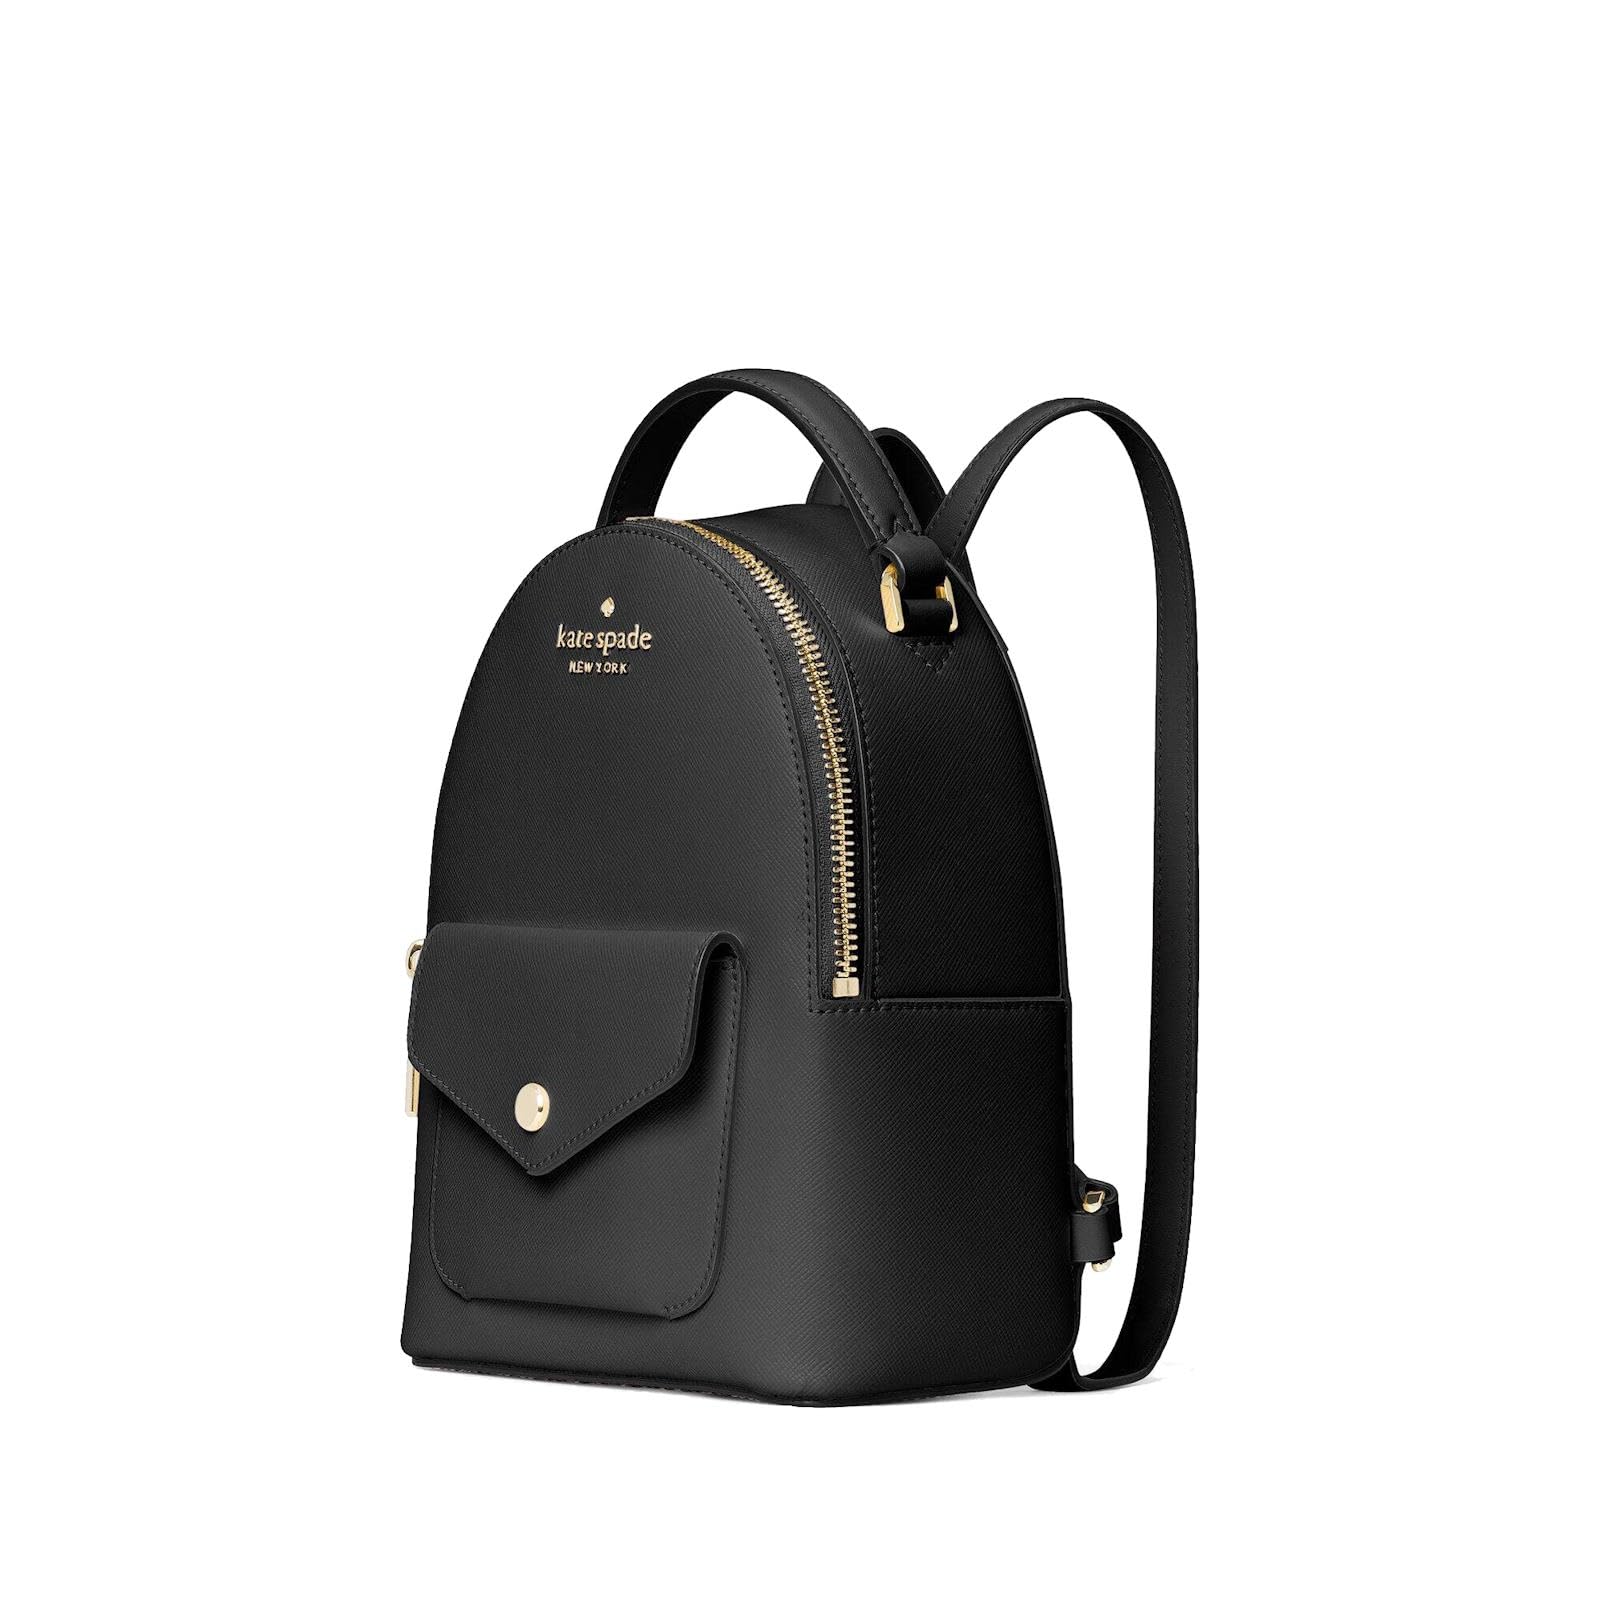 Kate Spade New York Women's Schuyler Saffiano Leather Mini Backpack, Black